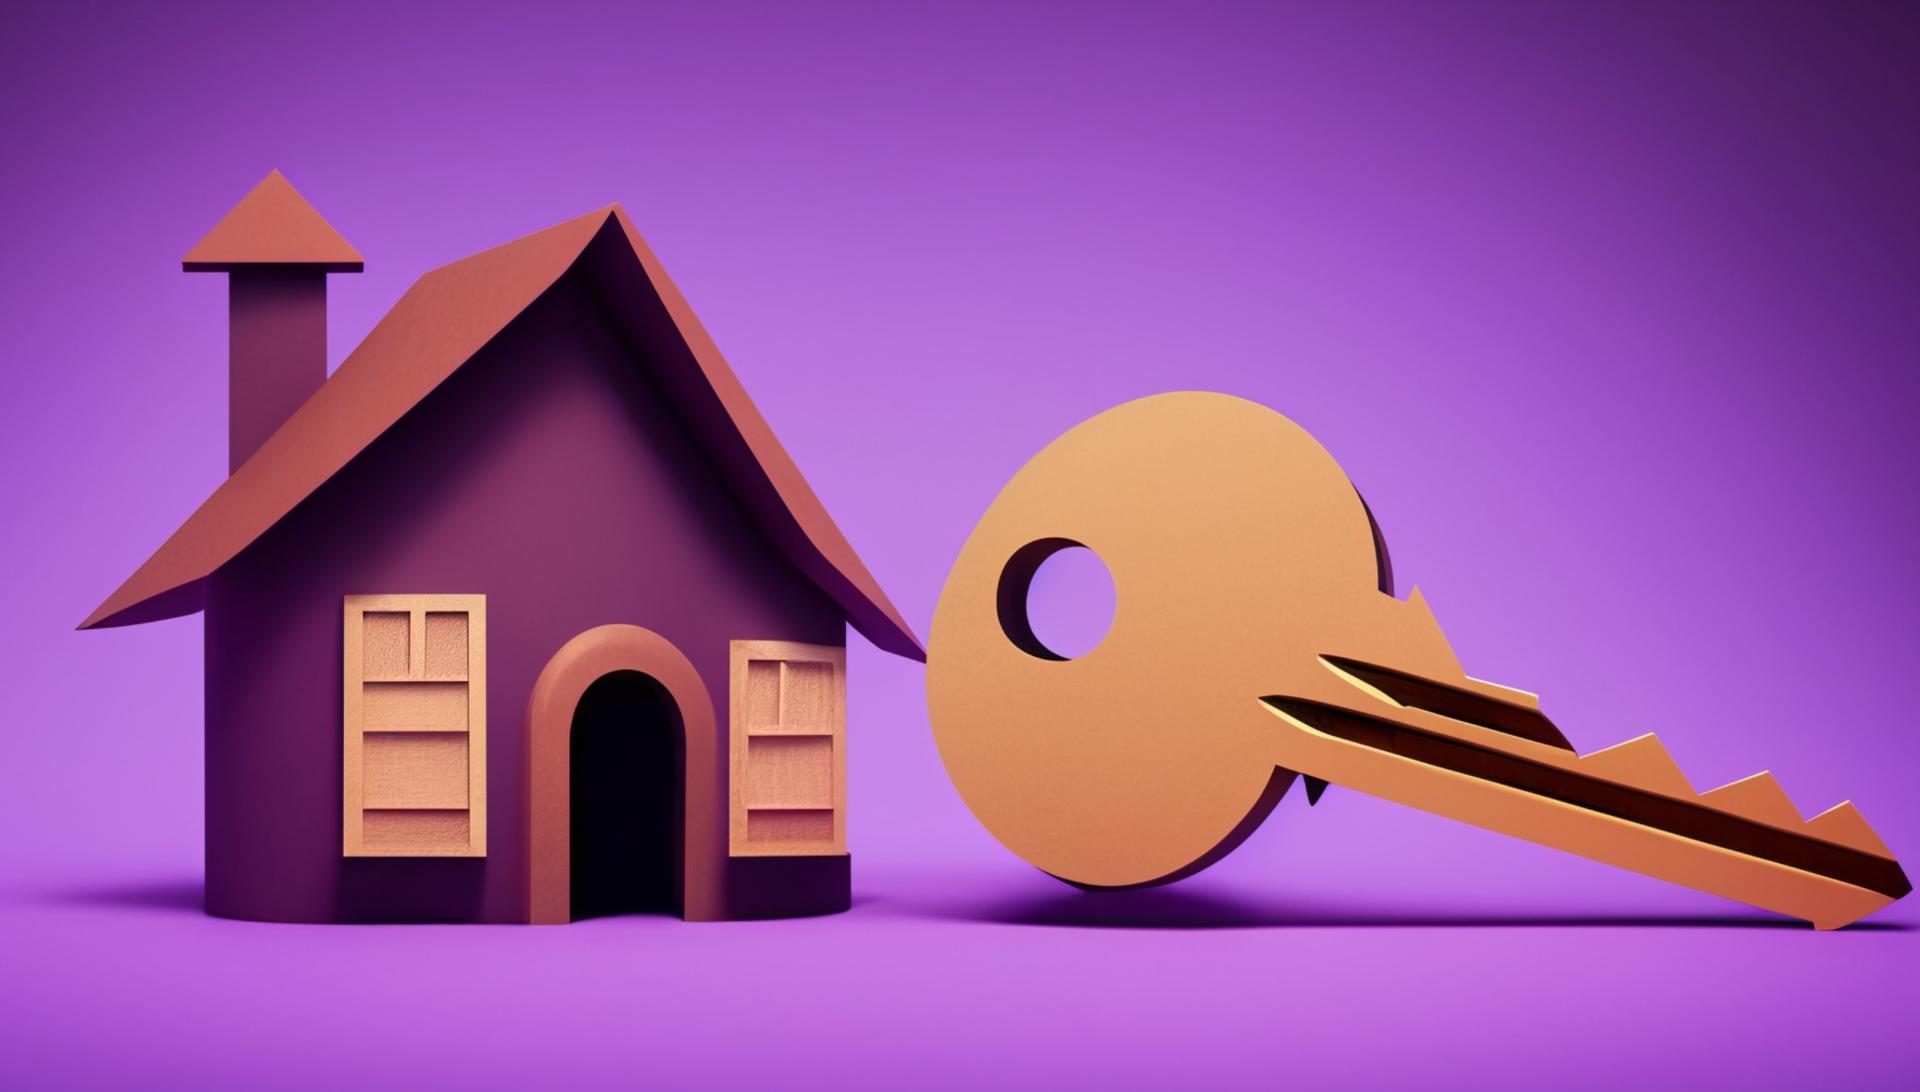 Key and a house 2